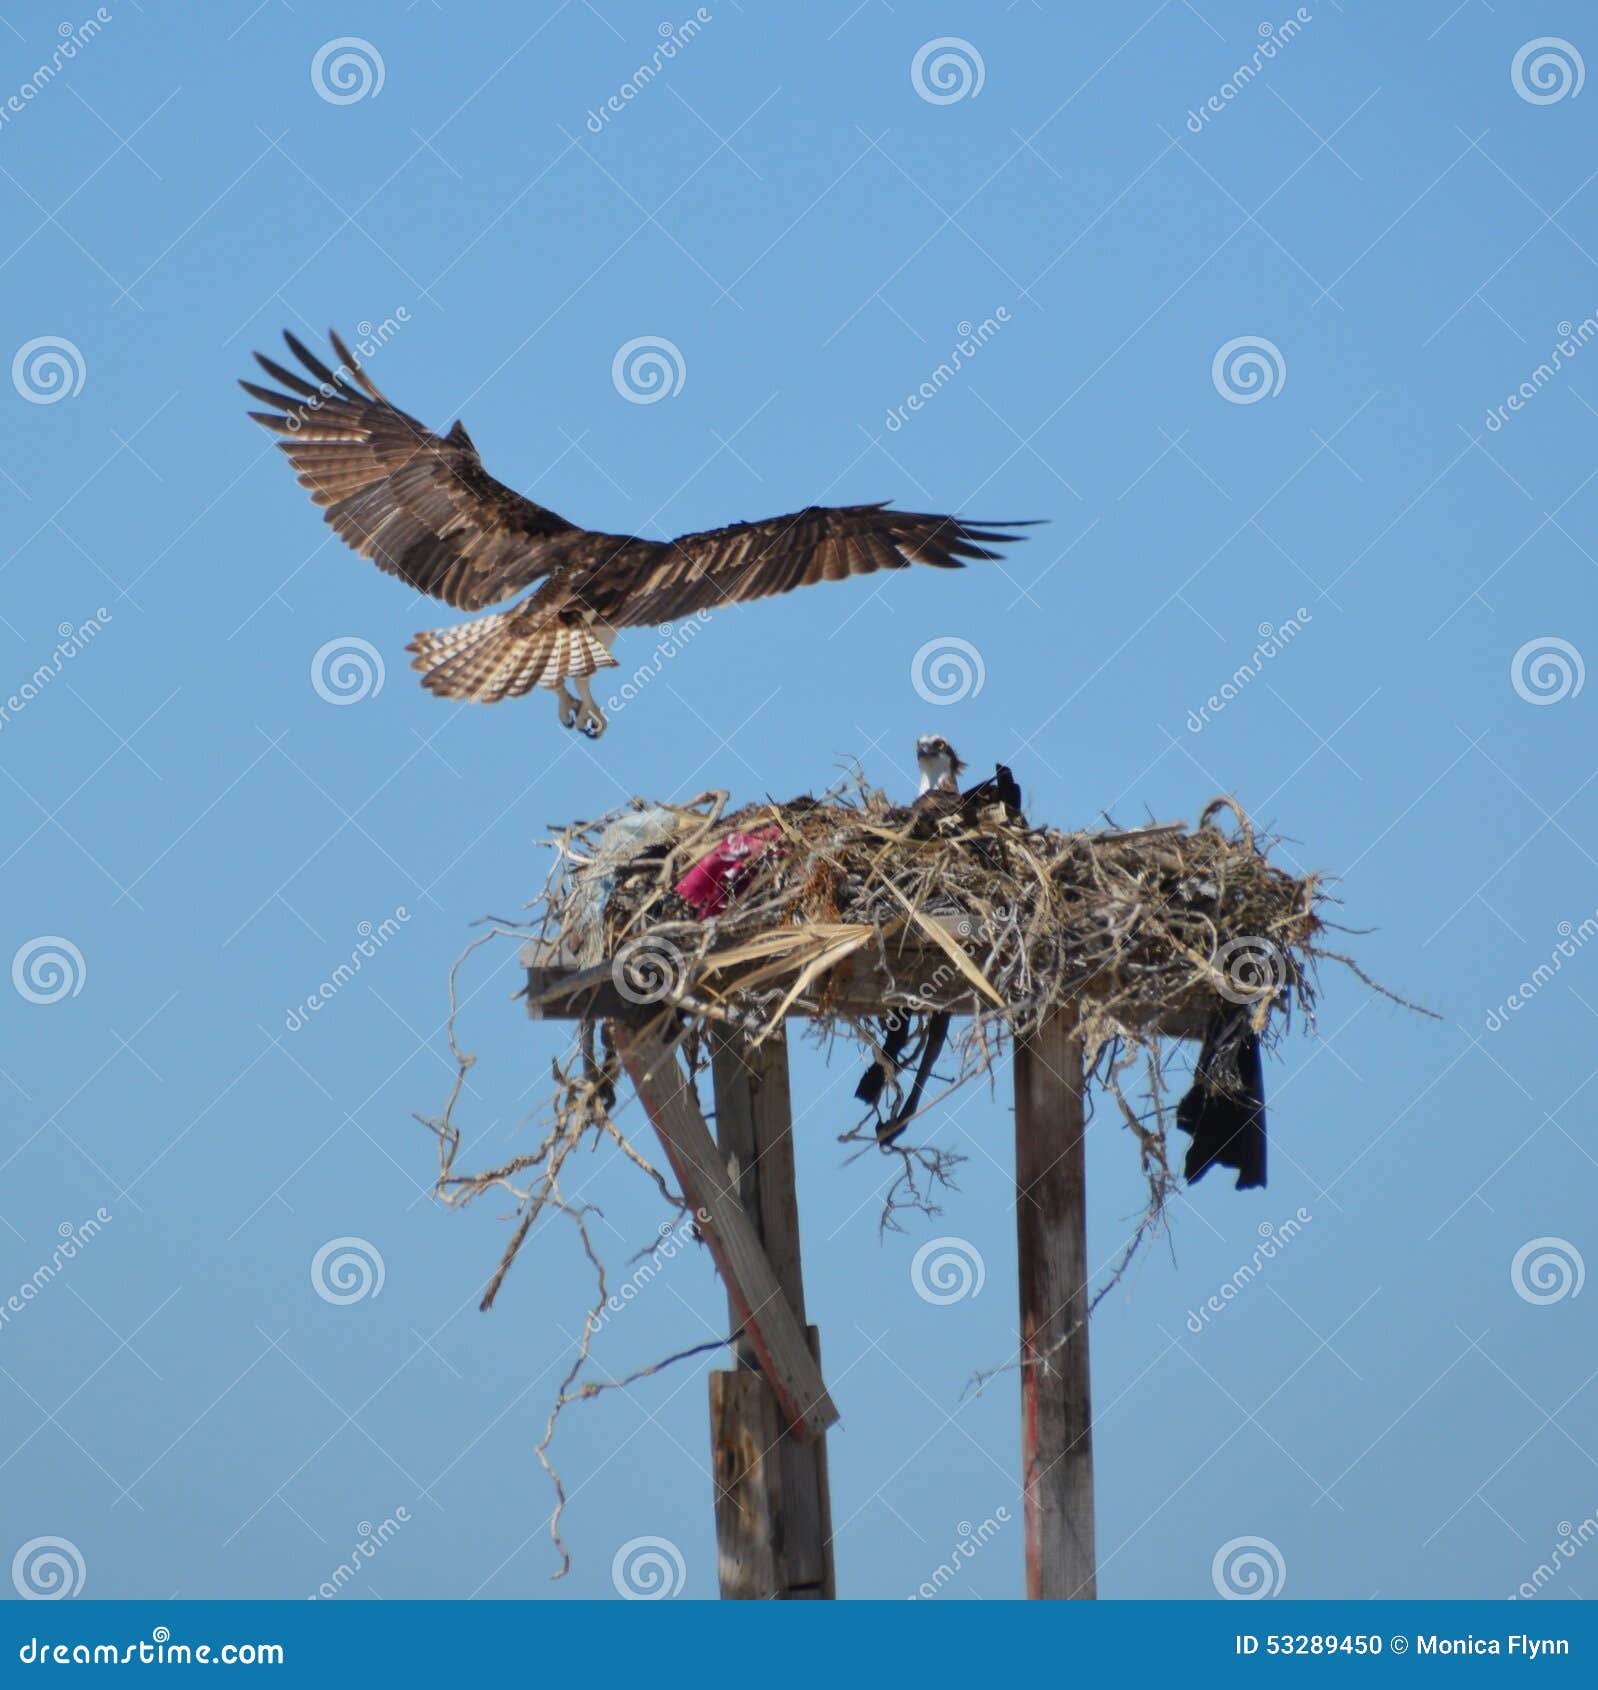 osprey landing in nest in guerro negro in baja california del sur, mexico